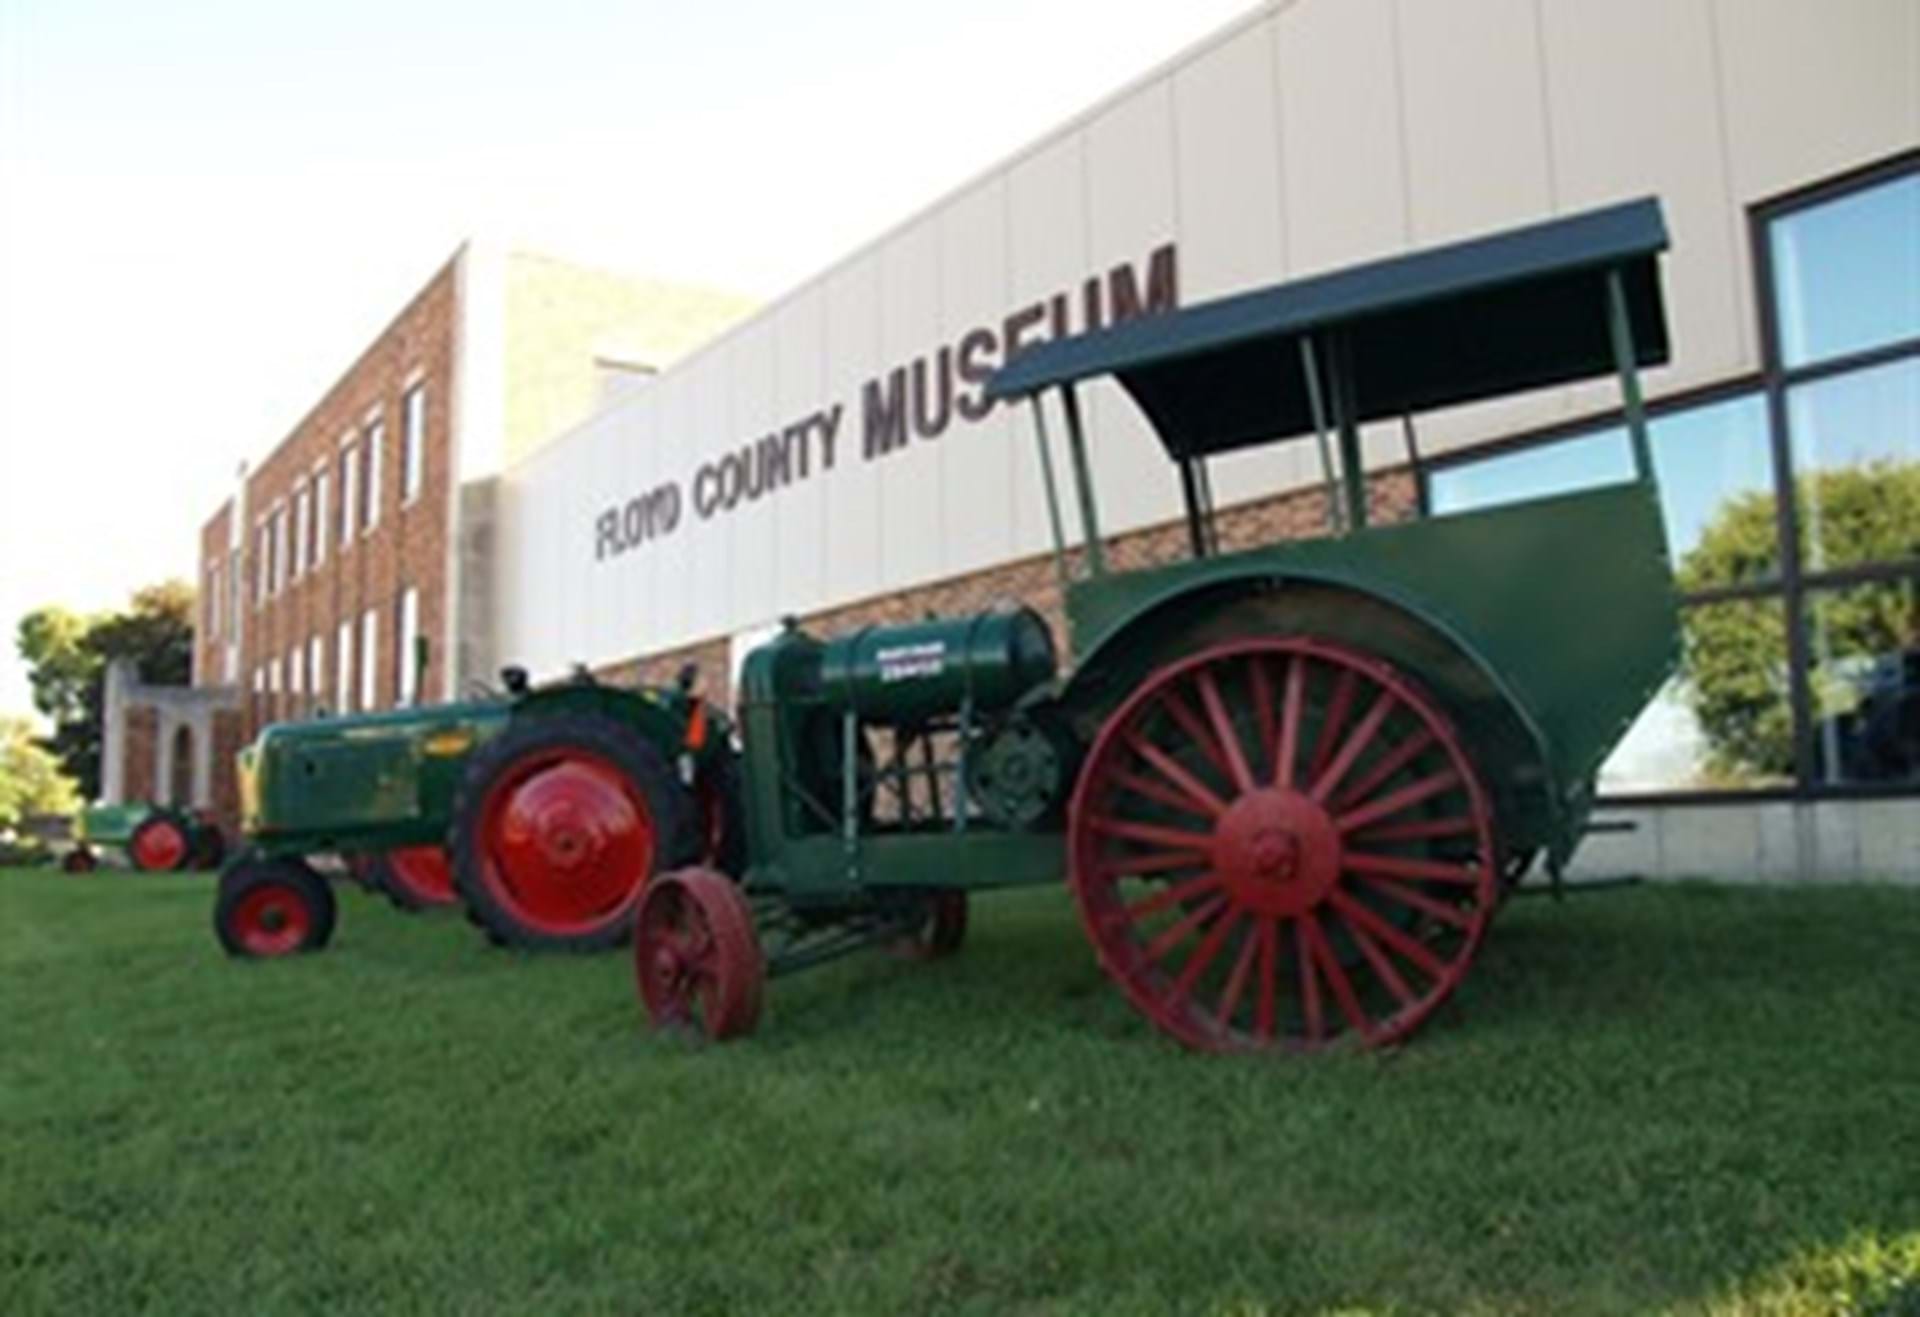 Floyd County Museum 